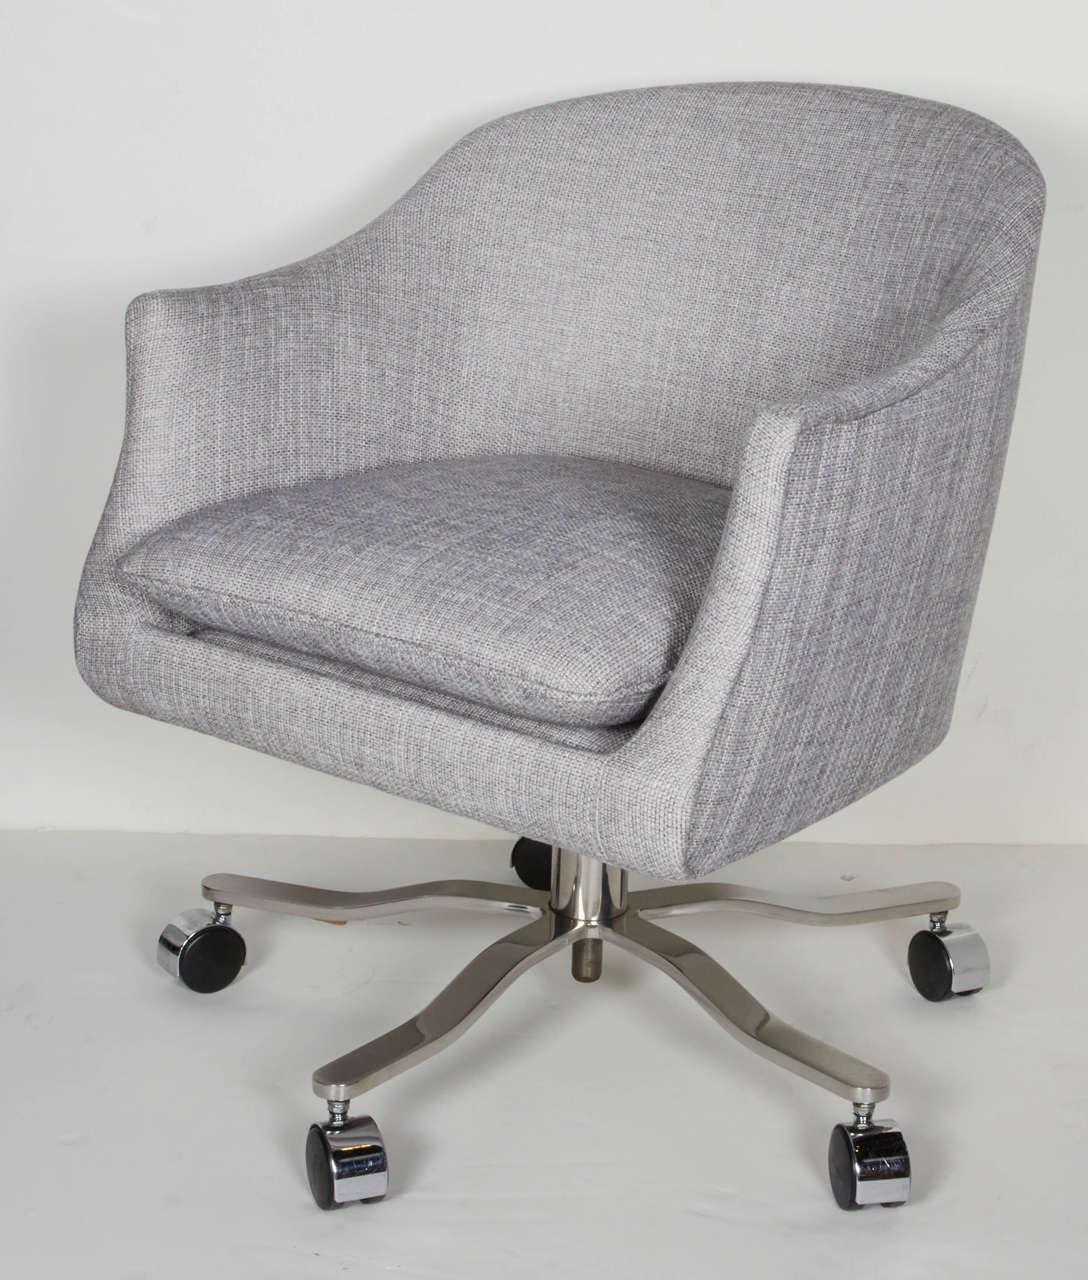 American Mid-Century Modern Swivel Desk Chair Designed by Ward Bennett